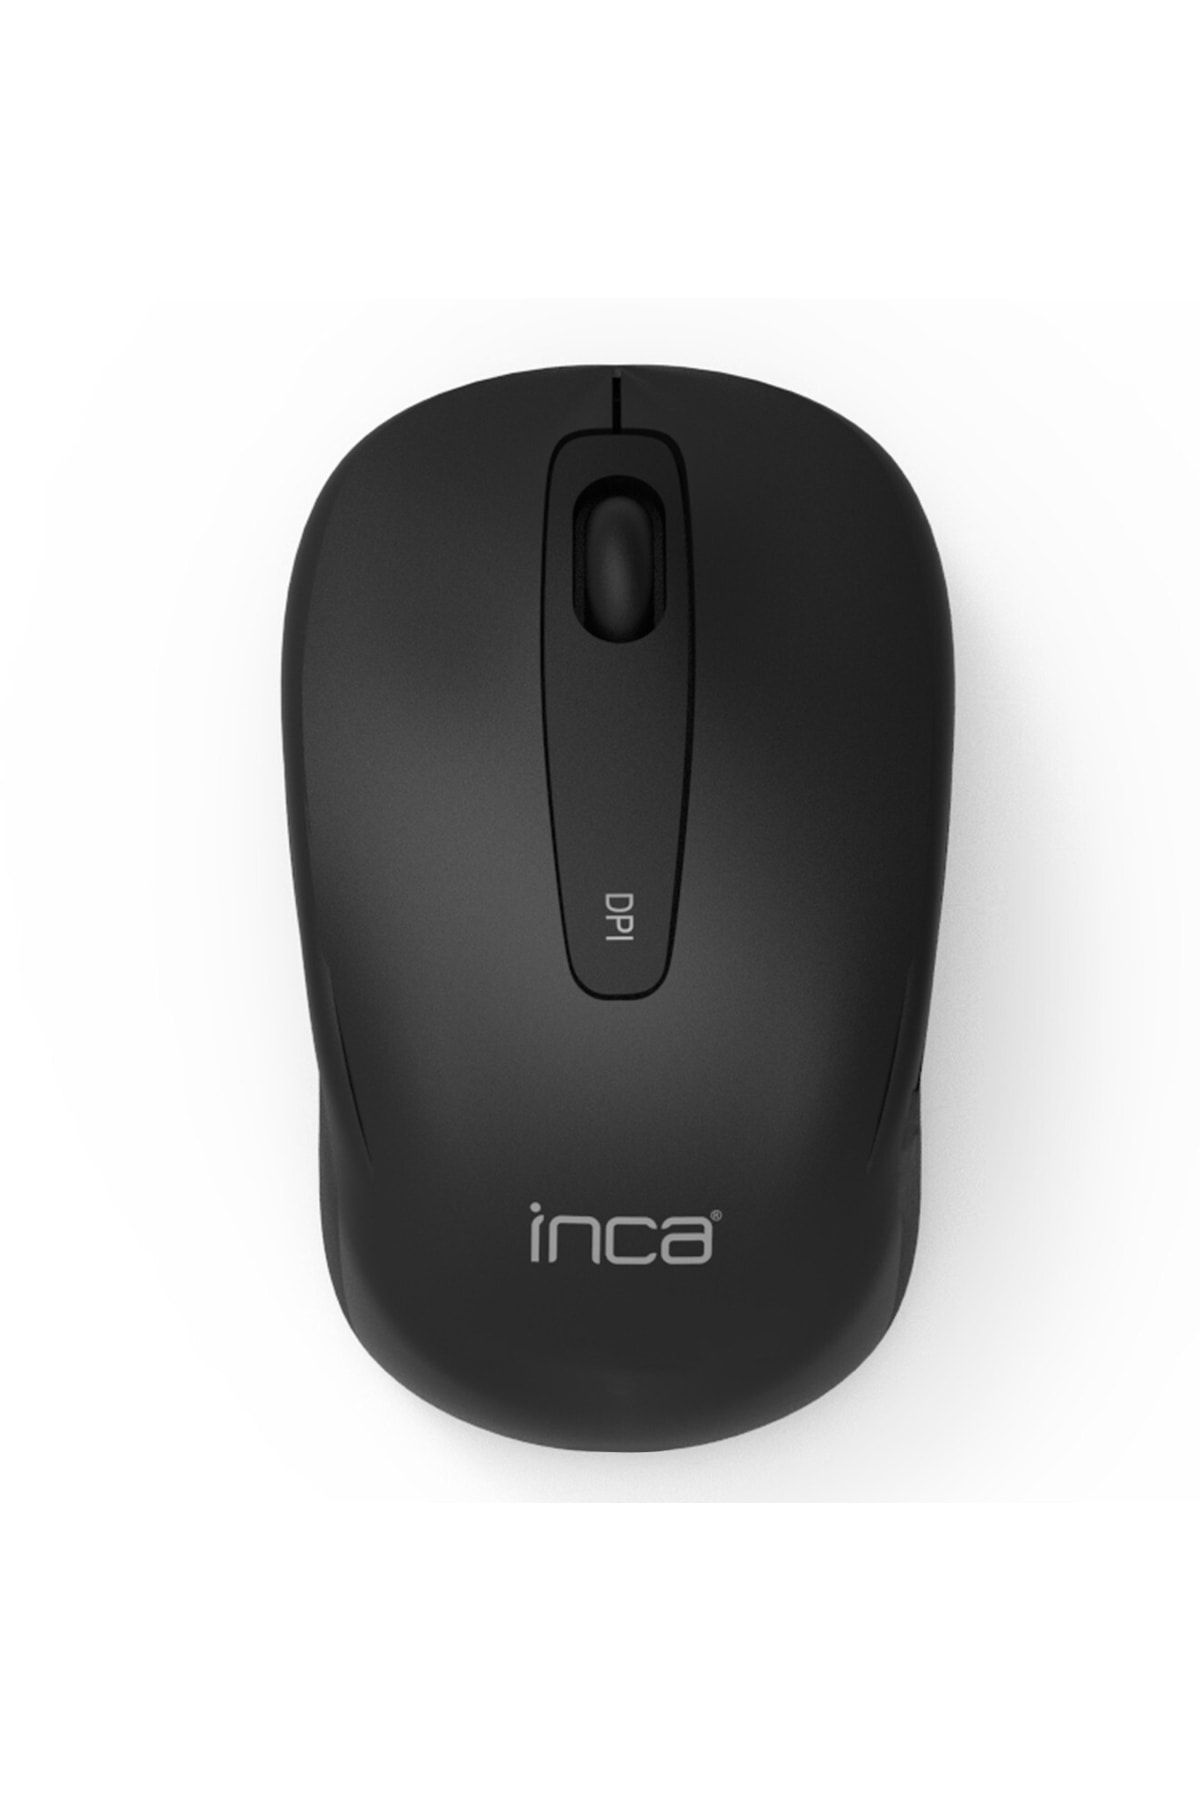 Inca Iwm-331rs Siyah Wireless Sessiz Mouse